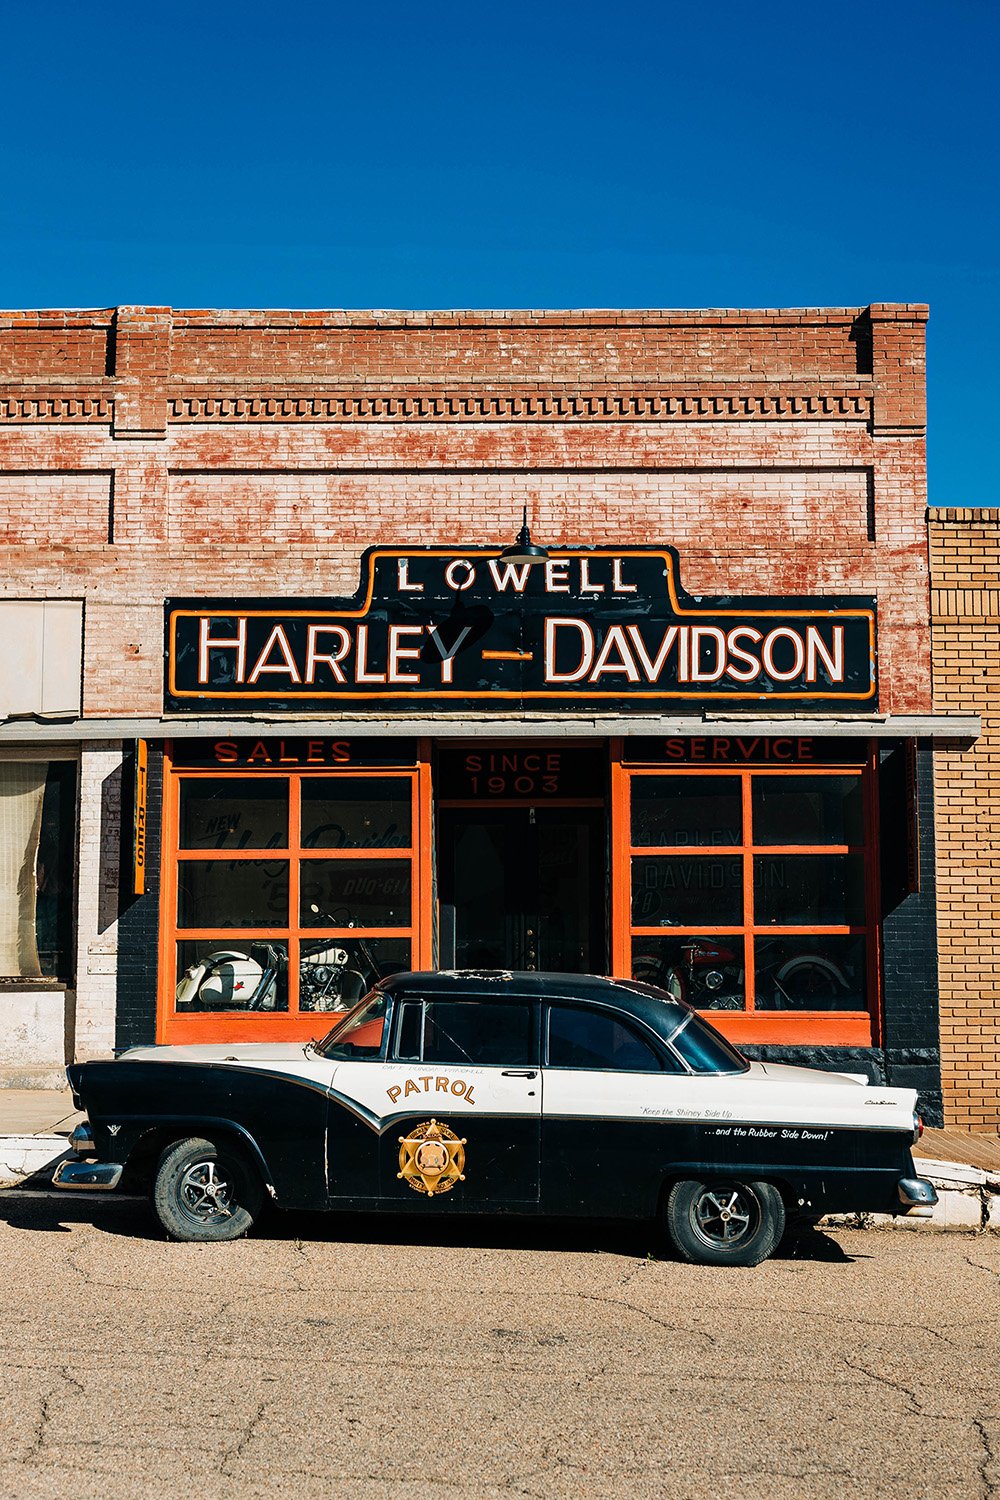 A retro police car in front of a retro Harley-Davidson building.